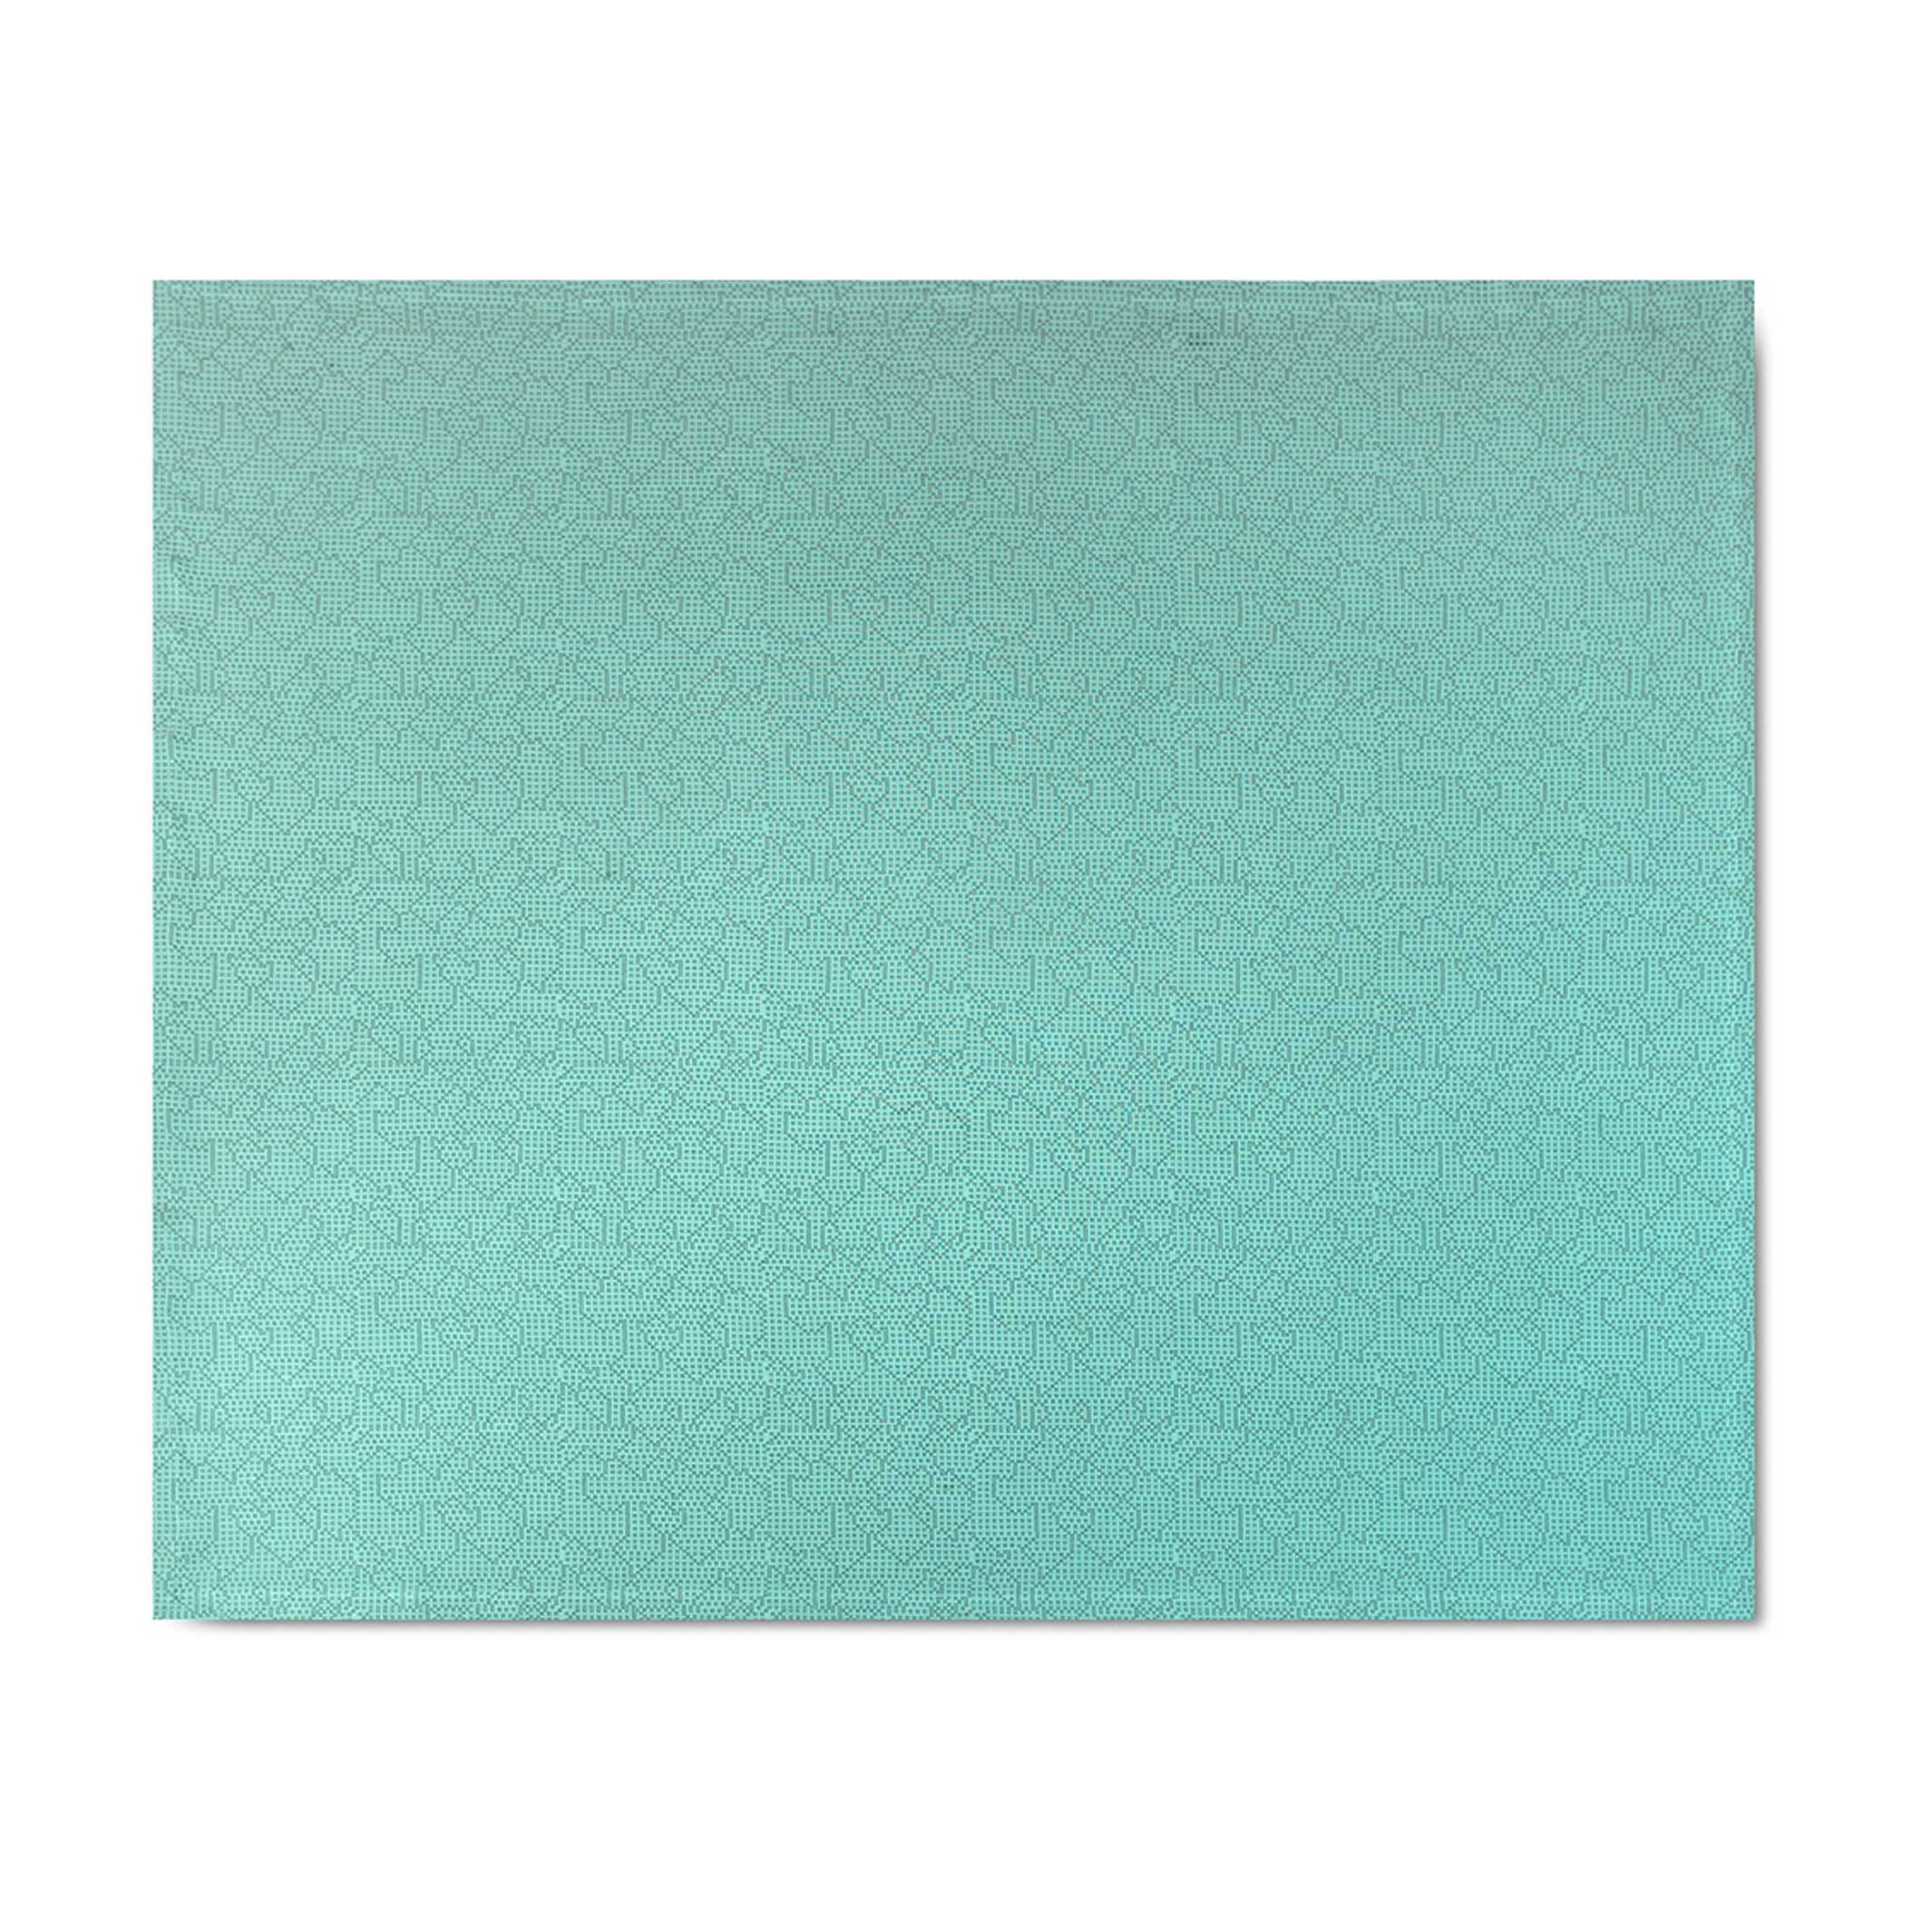 MAPPING BEDSPREAD | mint-farbige TAGES-BETT-DECKE | 235x245 cm | 100% Baumwolle | Cristian Zuzunaga